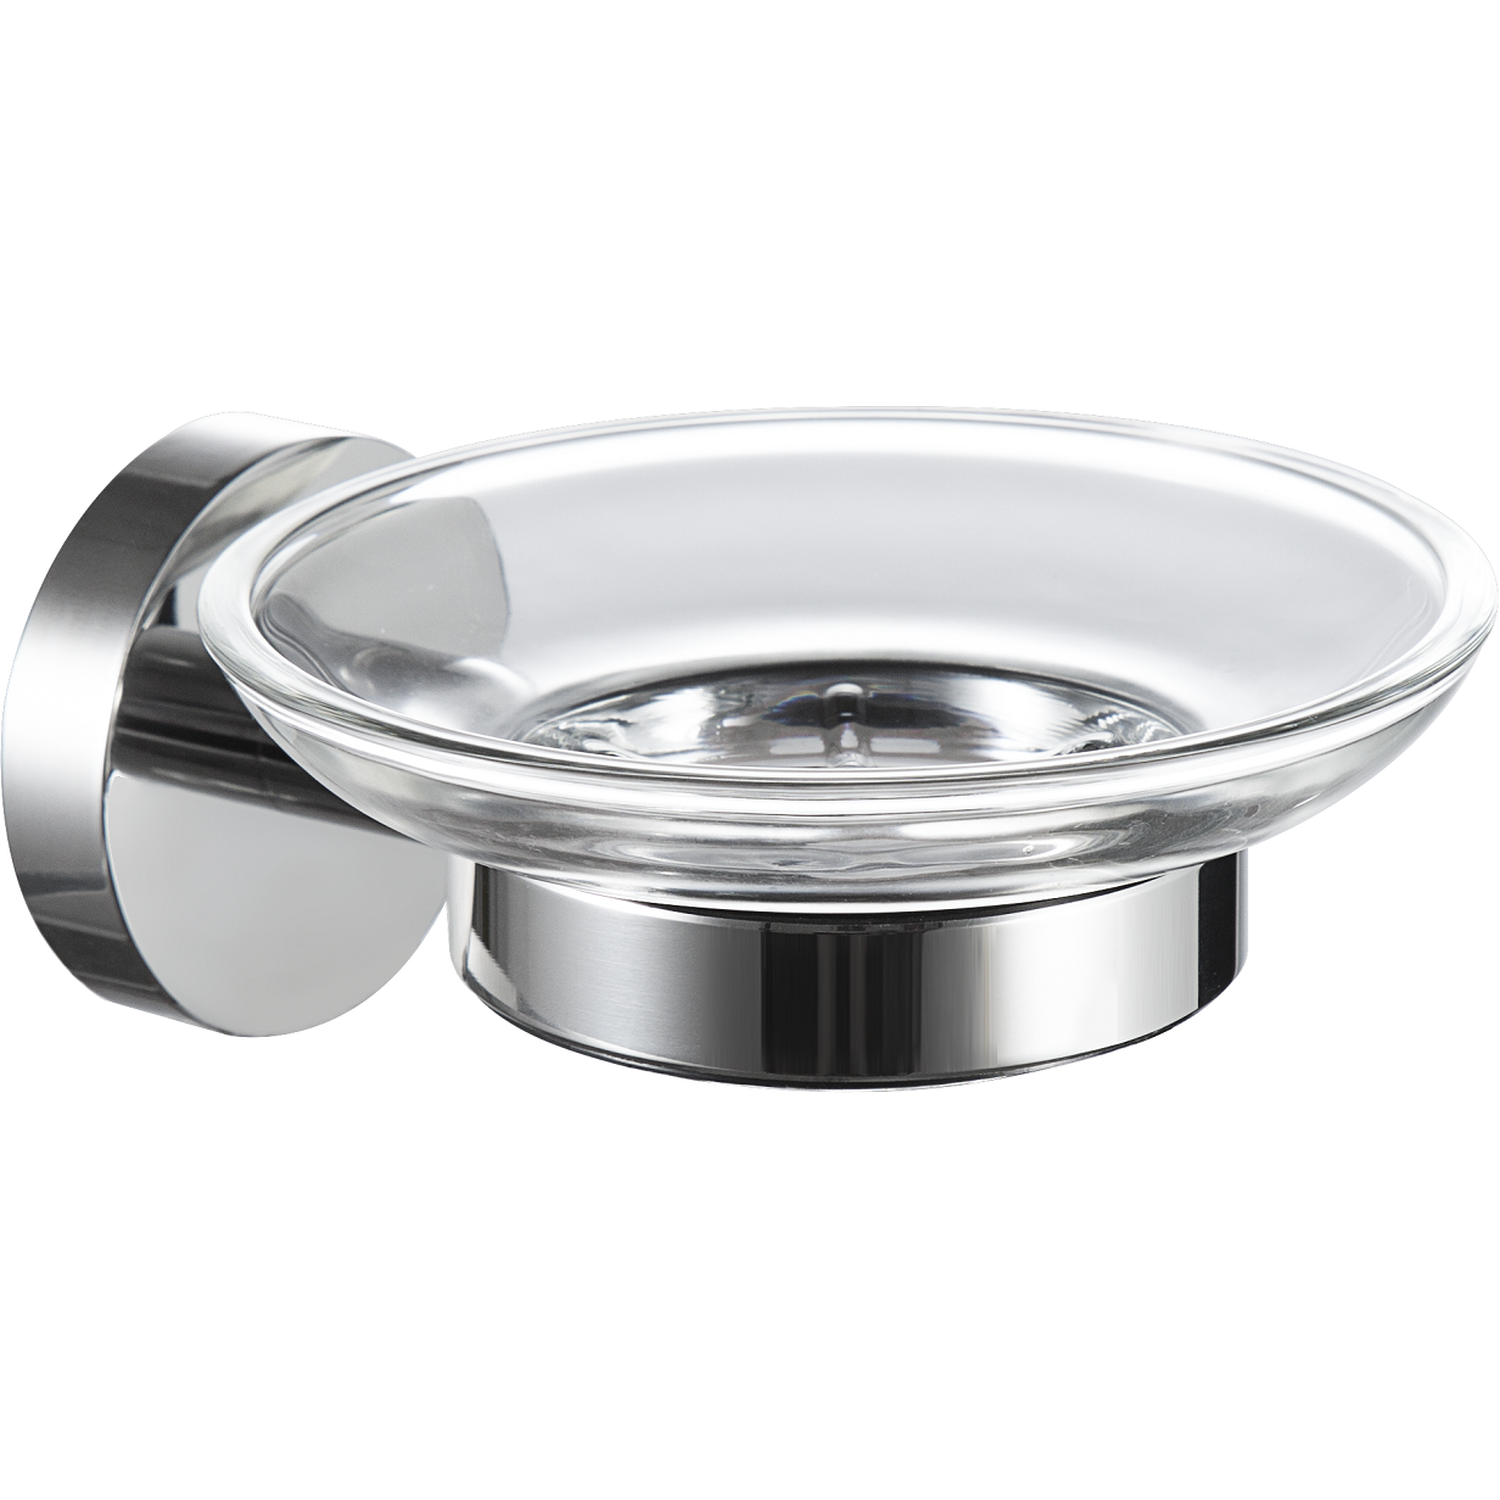 Kensington Soap Dish Holder - Silver Image